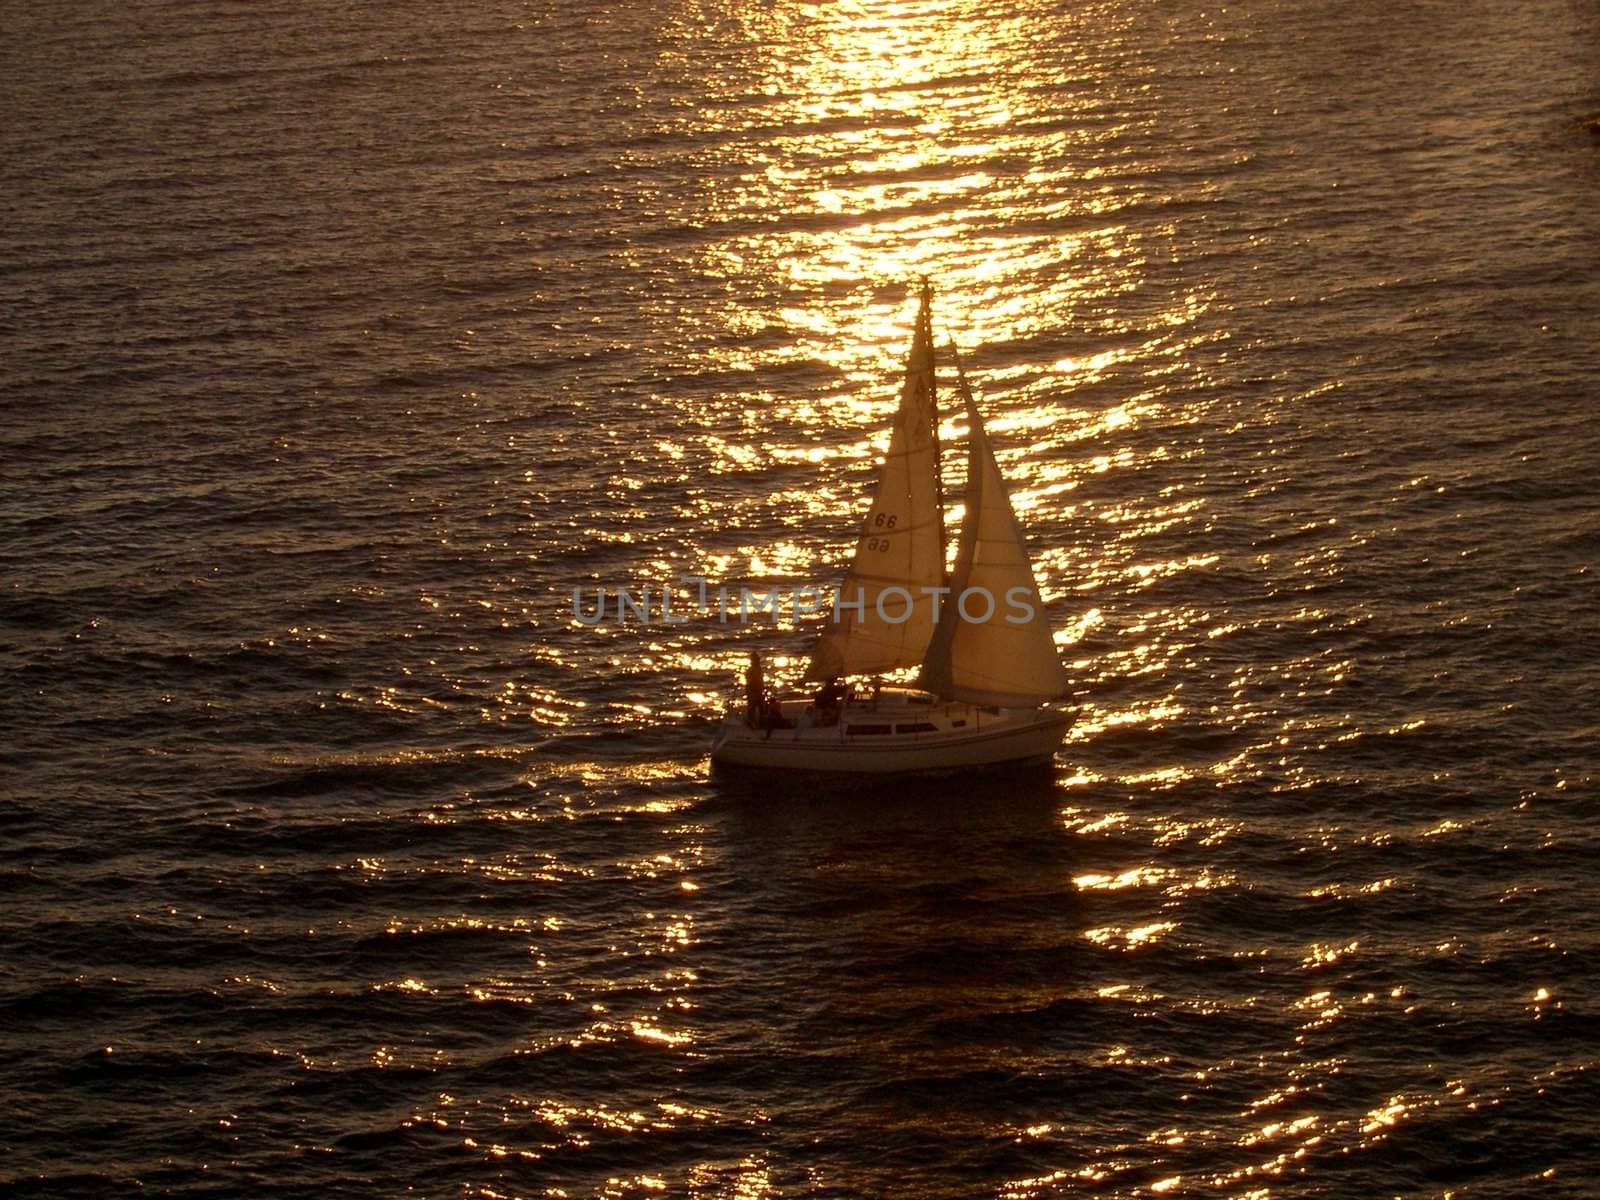 sunset sailing by photosbyrob